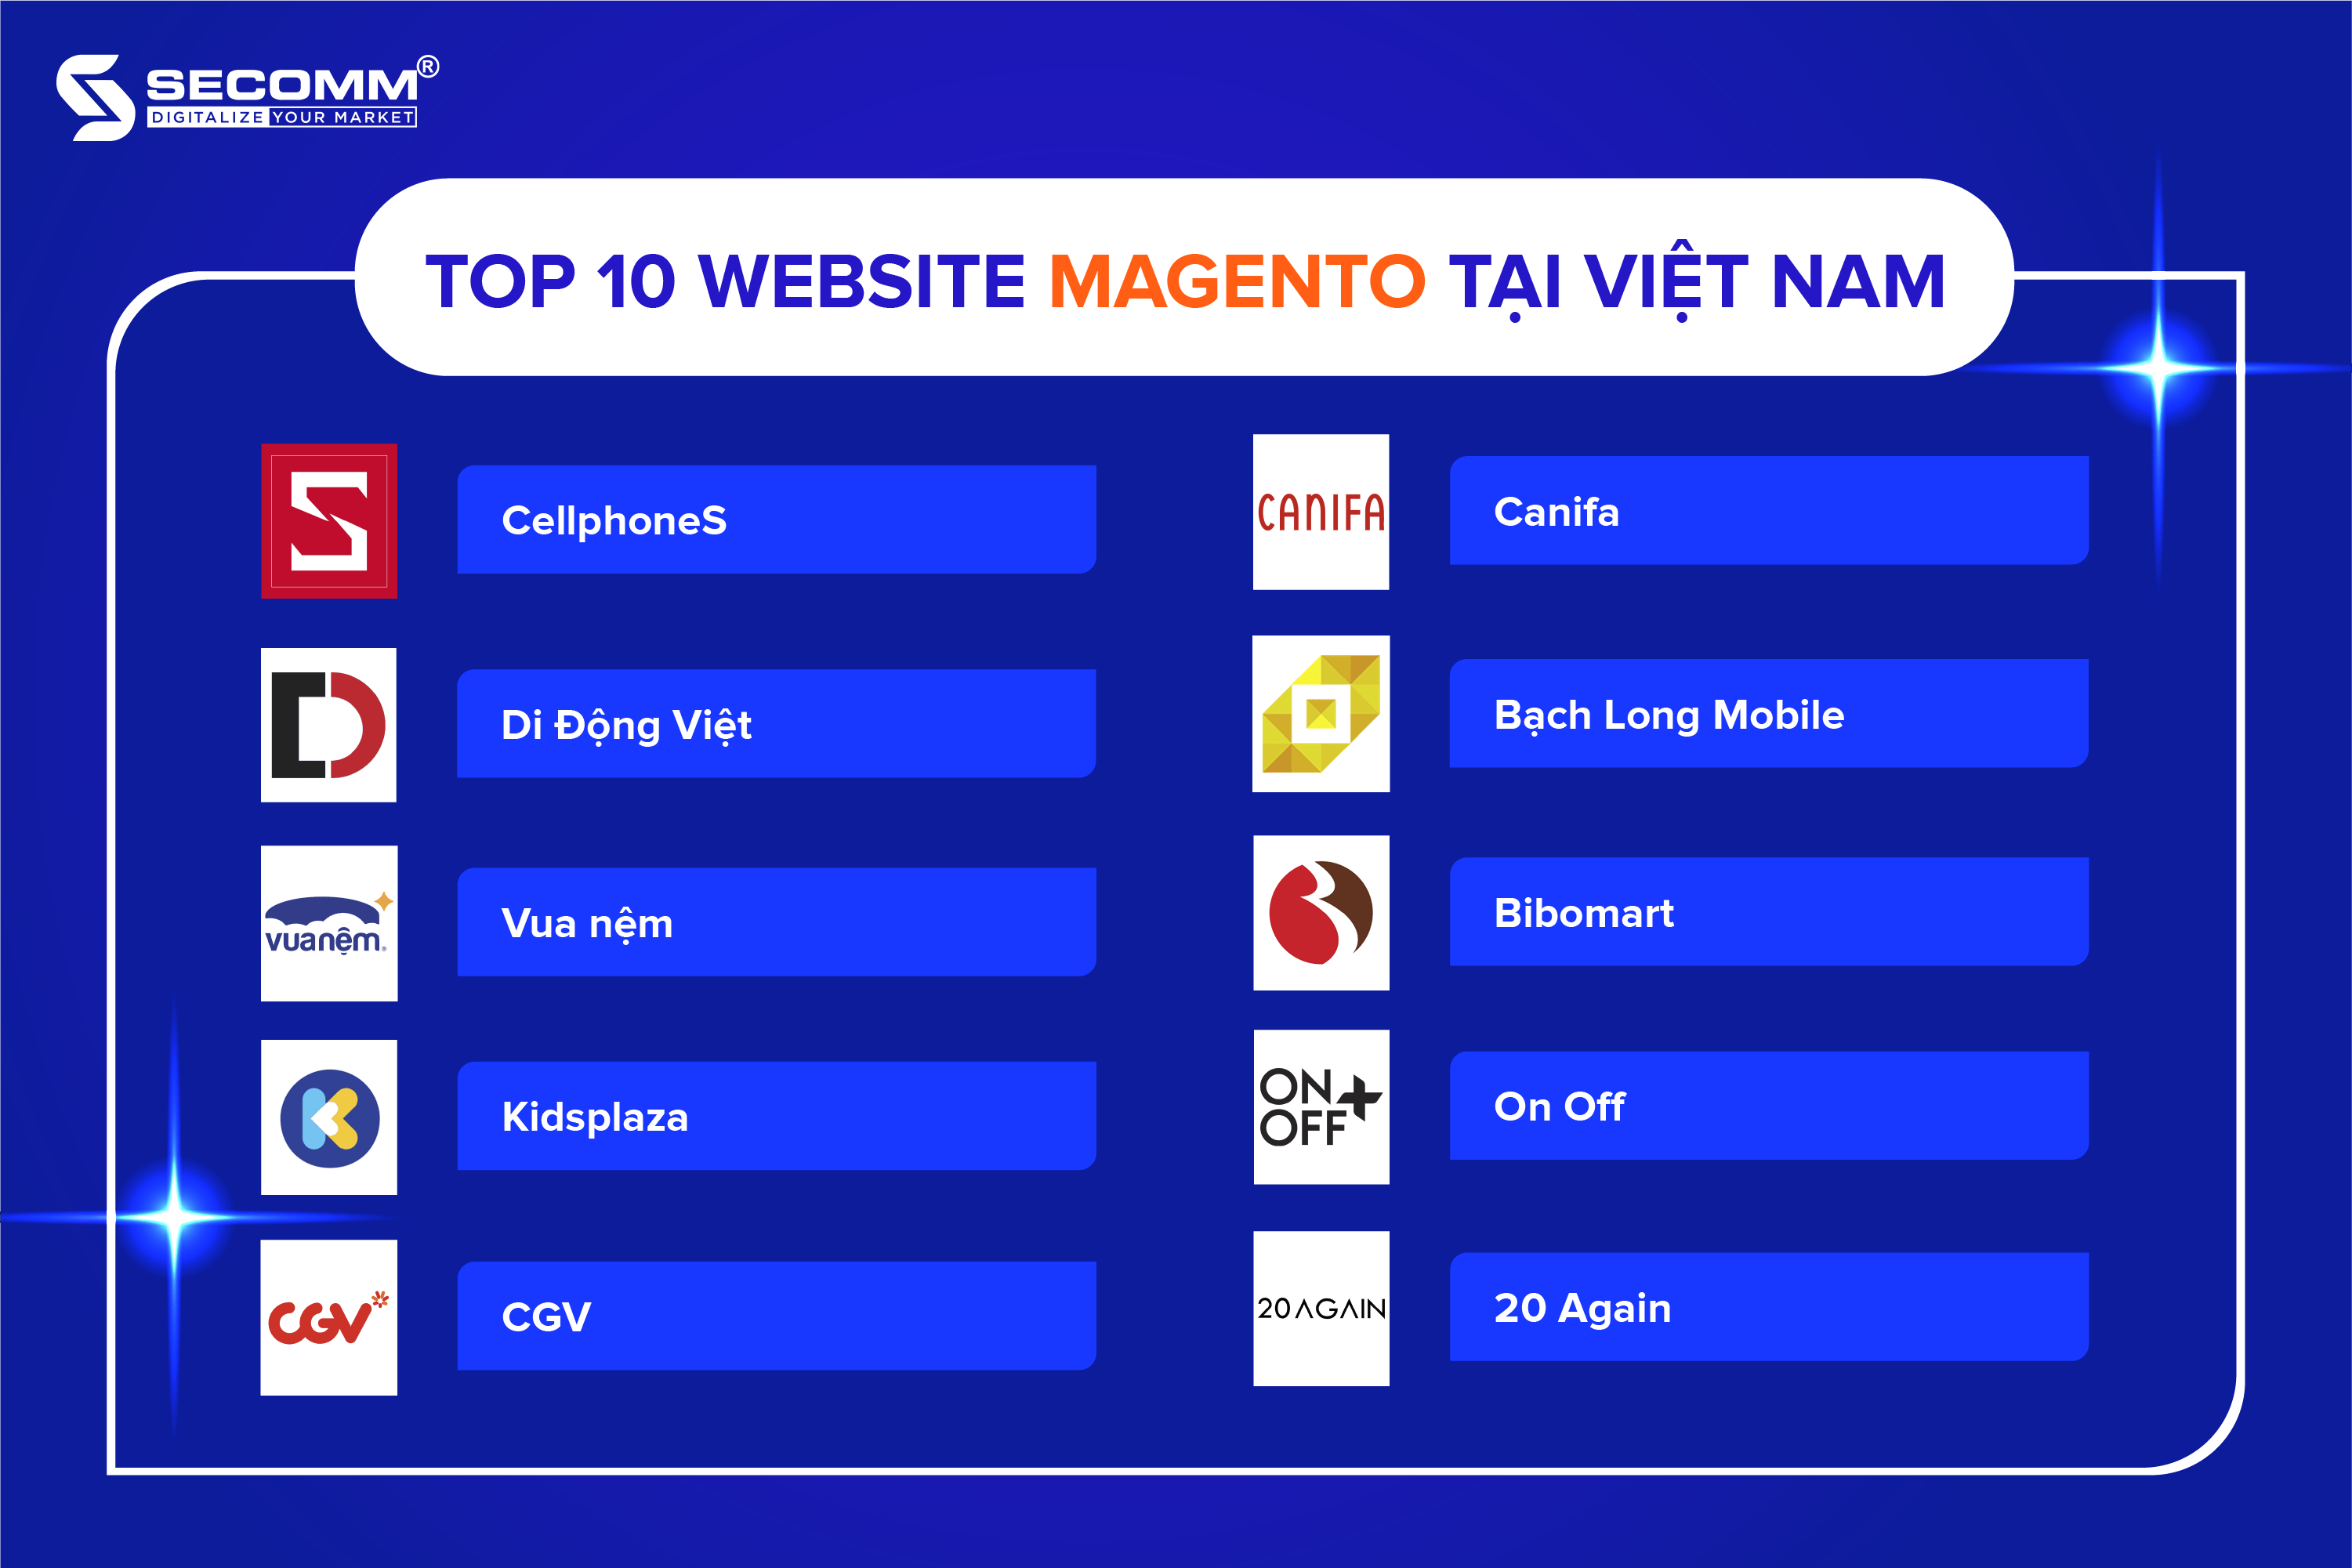 TOP 10 WEBSITE MAGENTO TẠI VIỆT NAM